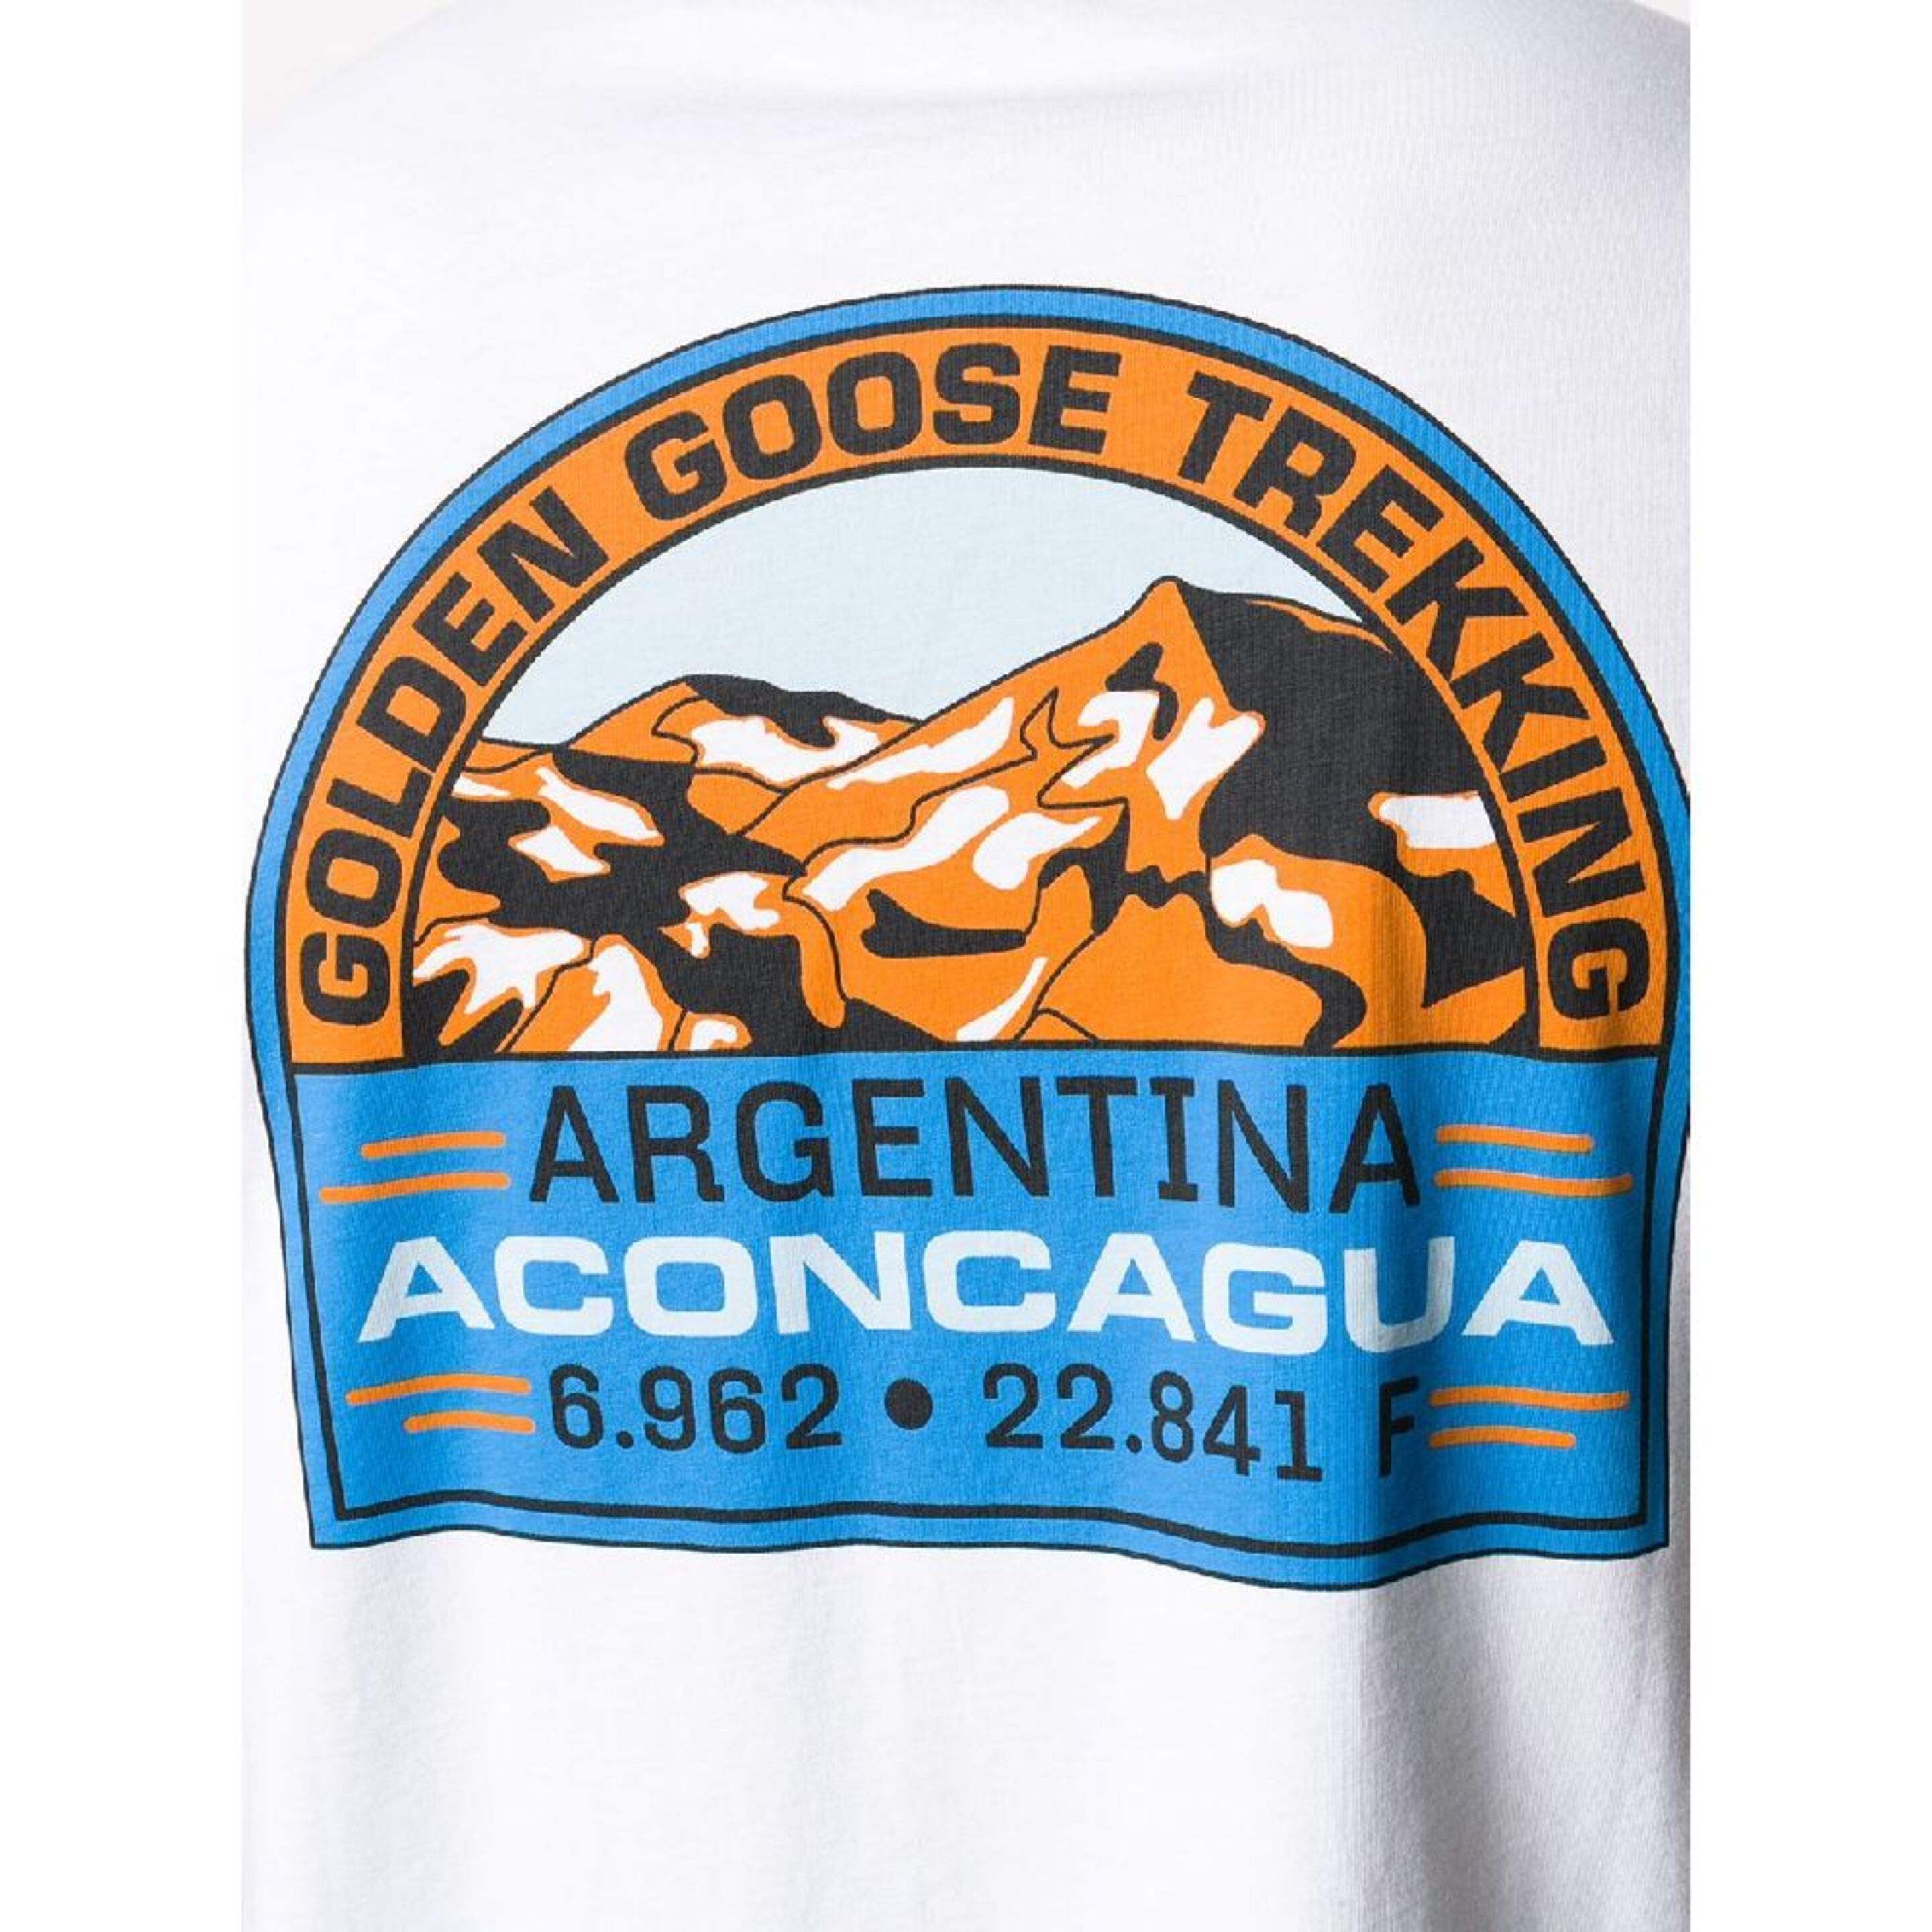 Camiseta Golden Goose Algodon Gmp00455p00018710367